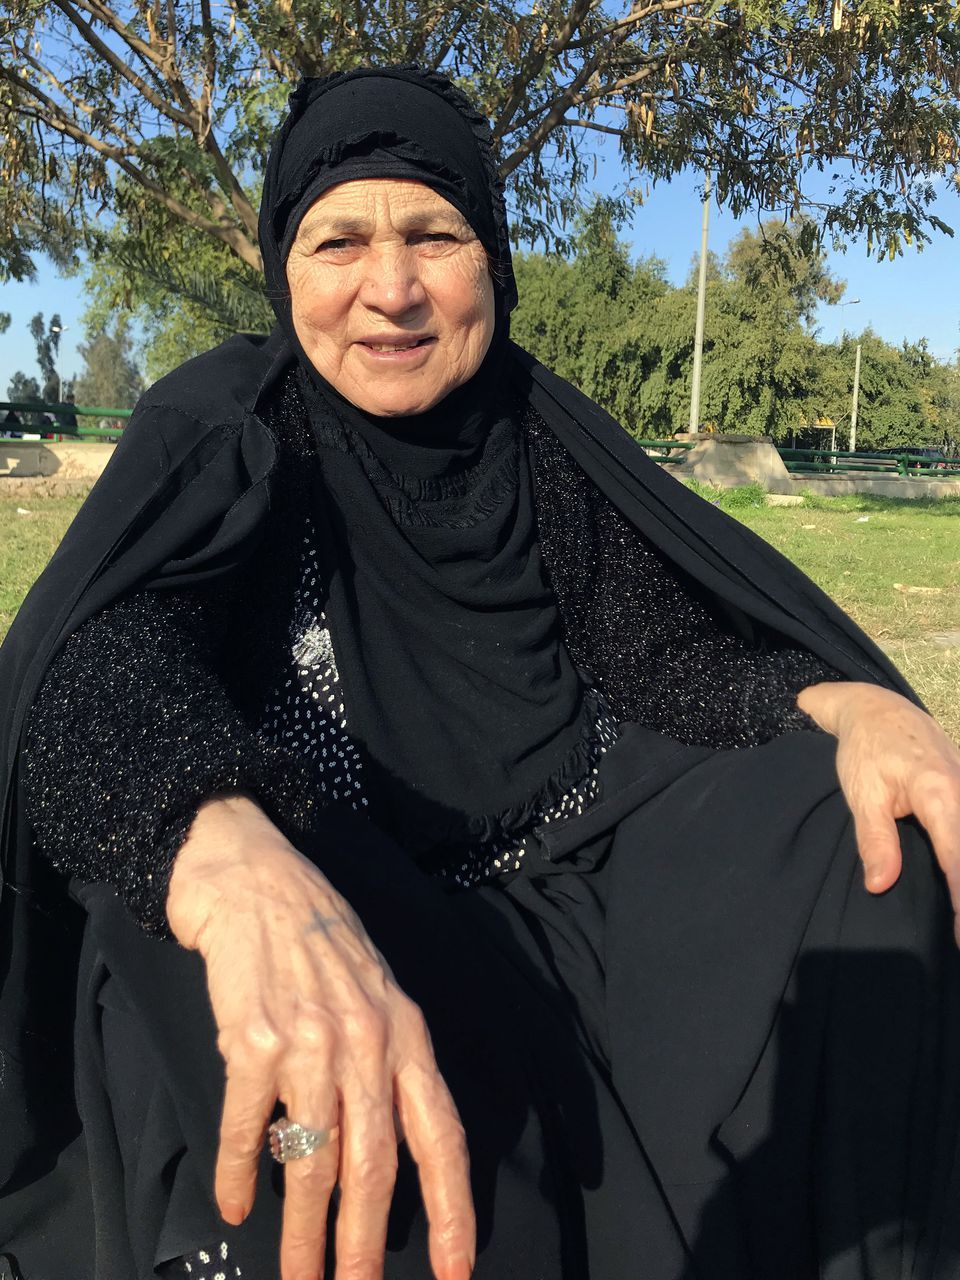 Fawziya Ali, Zahra Ahmad's grandmother, poses for a photo at a park in Baghdad, Iraq. Image courtesy of Ahmad family.